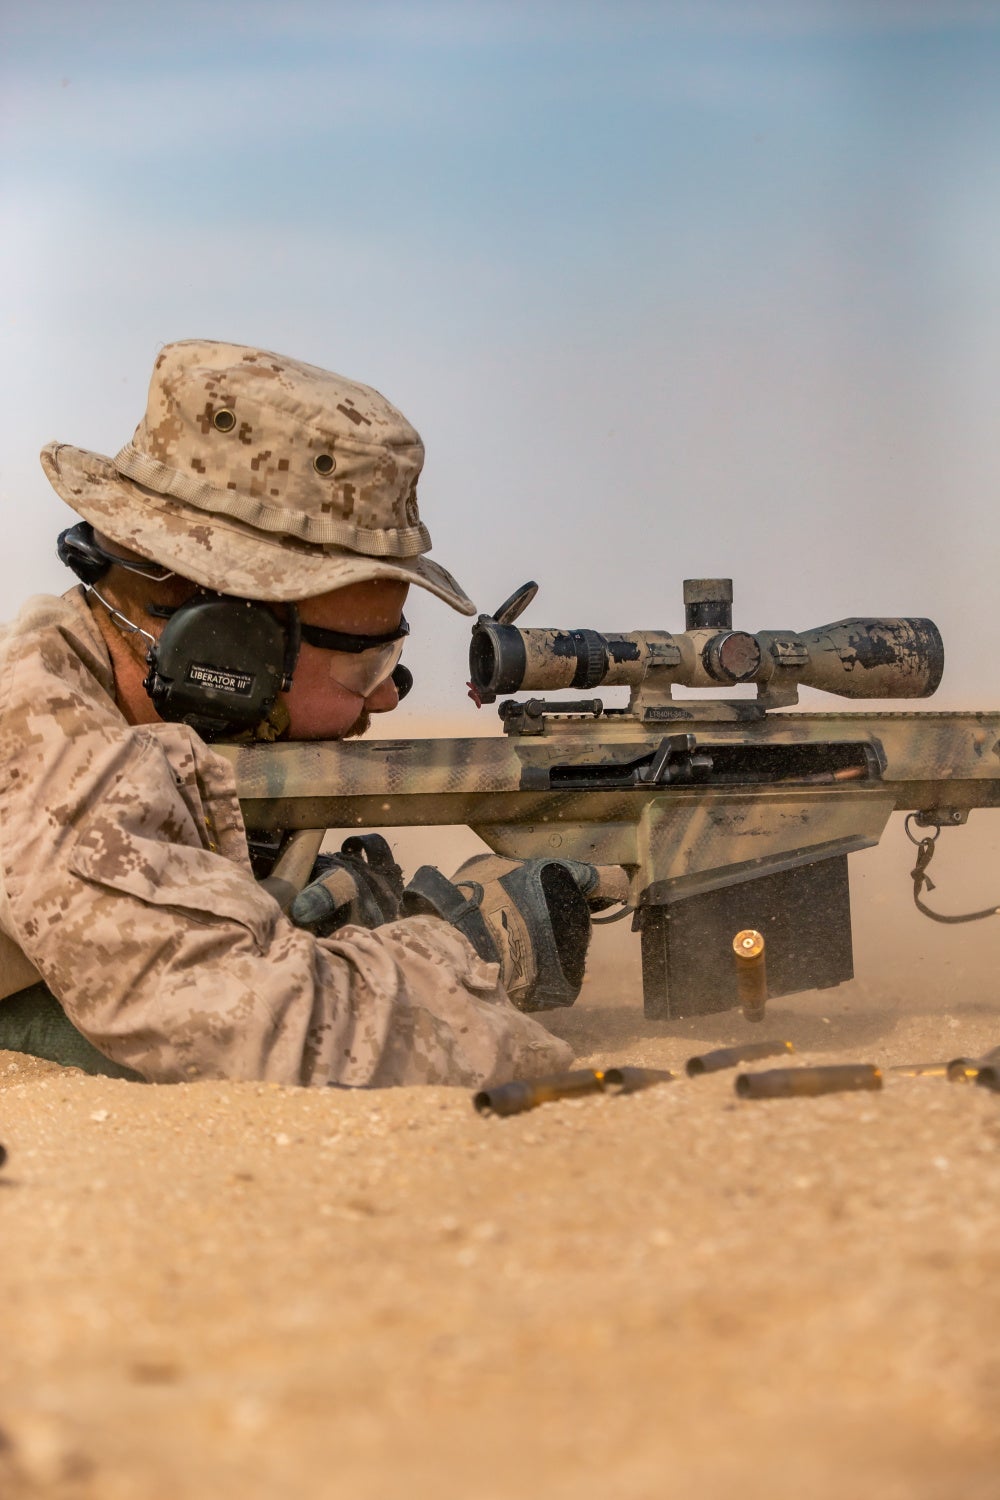 POTD: M107 Semi-Automatic Long Range Sniper Rifle in Kuwait